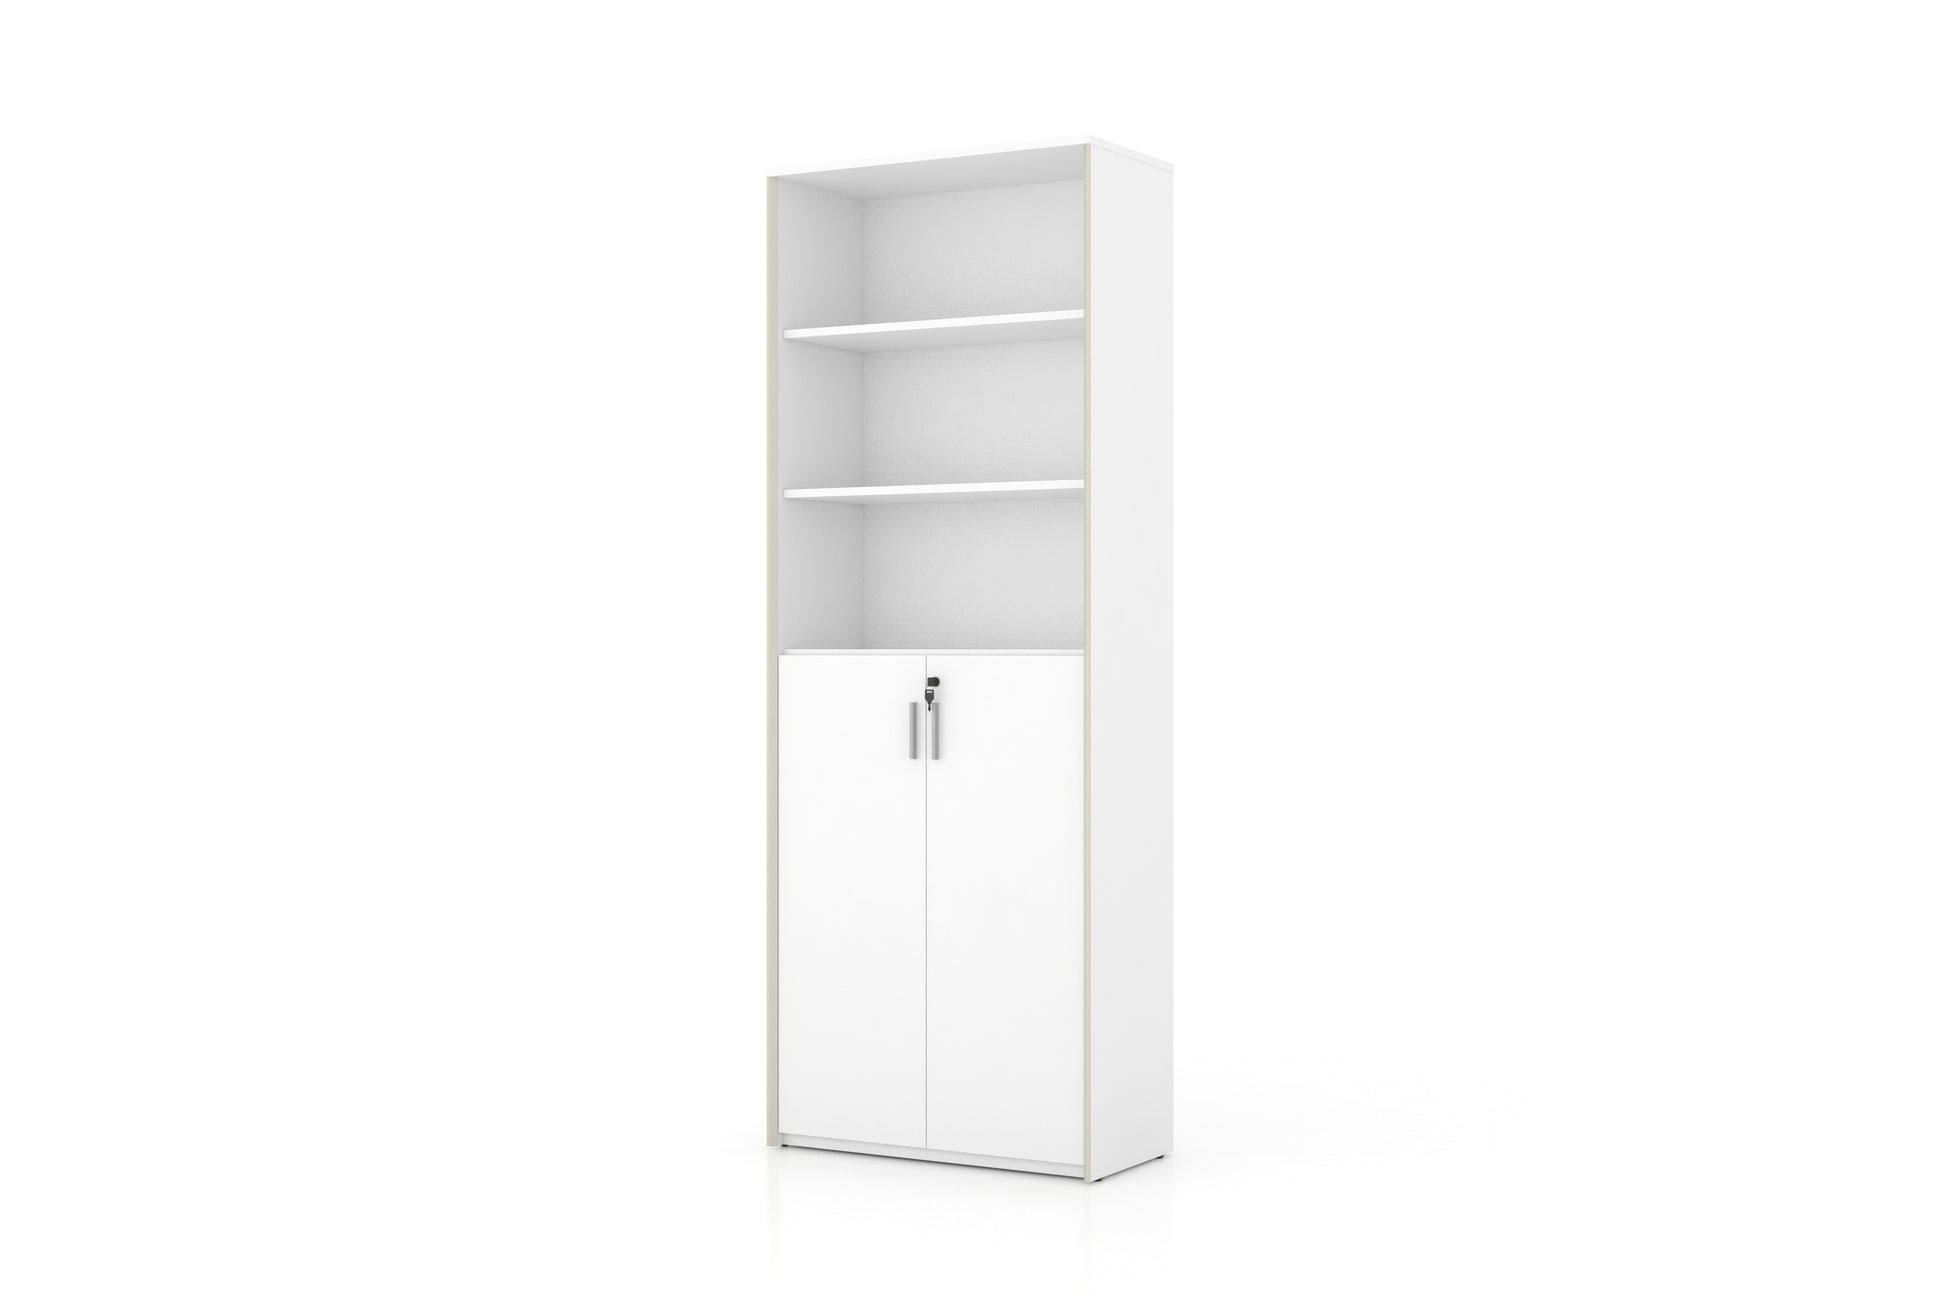 Universal 6-Level Cabinet (White Body) Consumer KANO CF05 White Upper Shelves are Open 8-10 Weeks